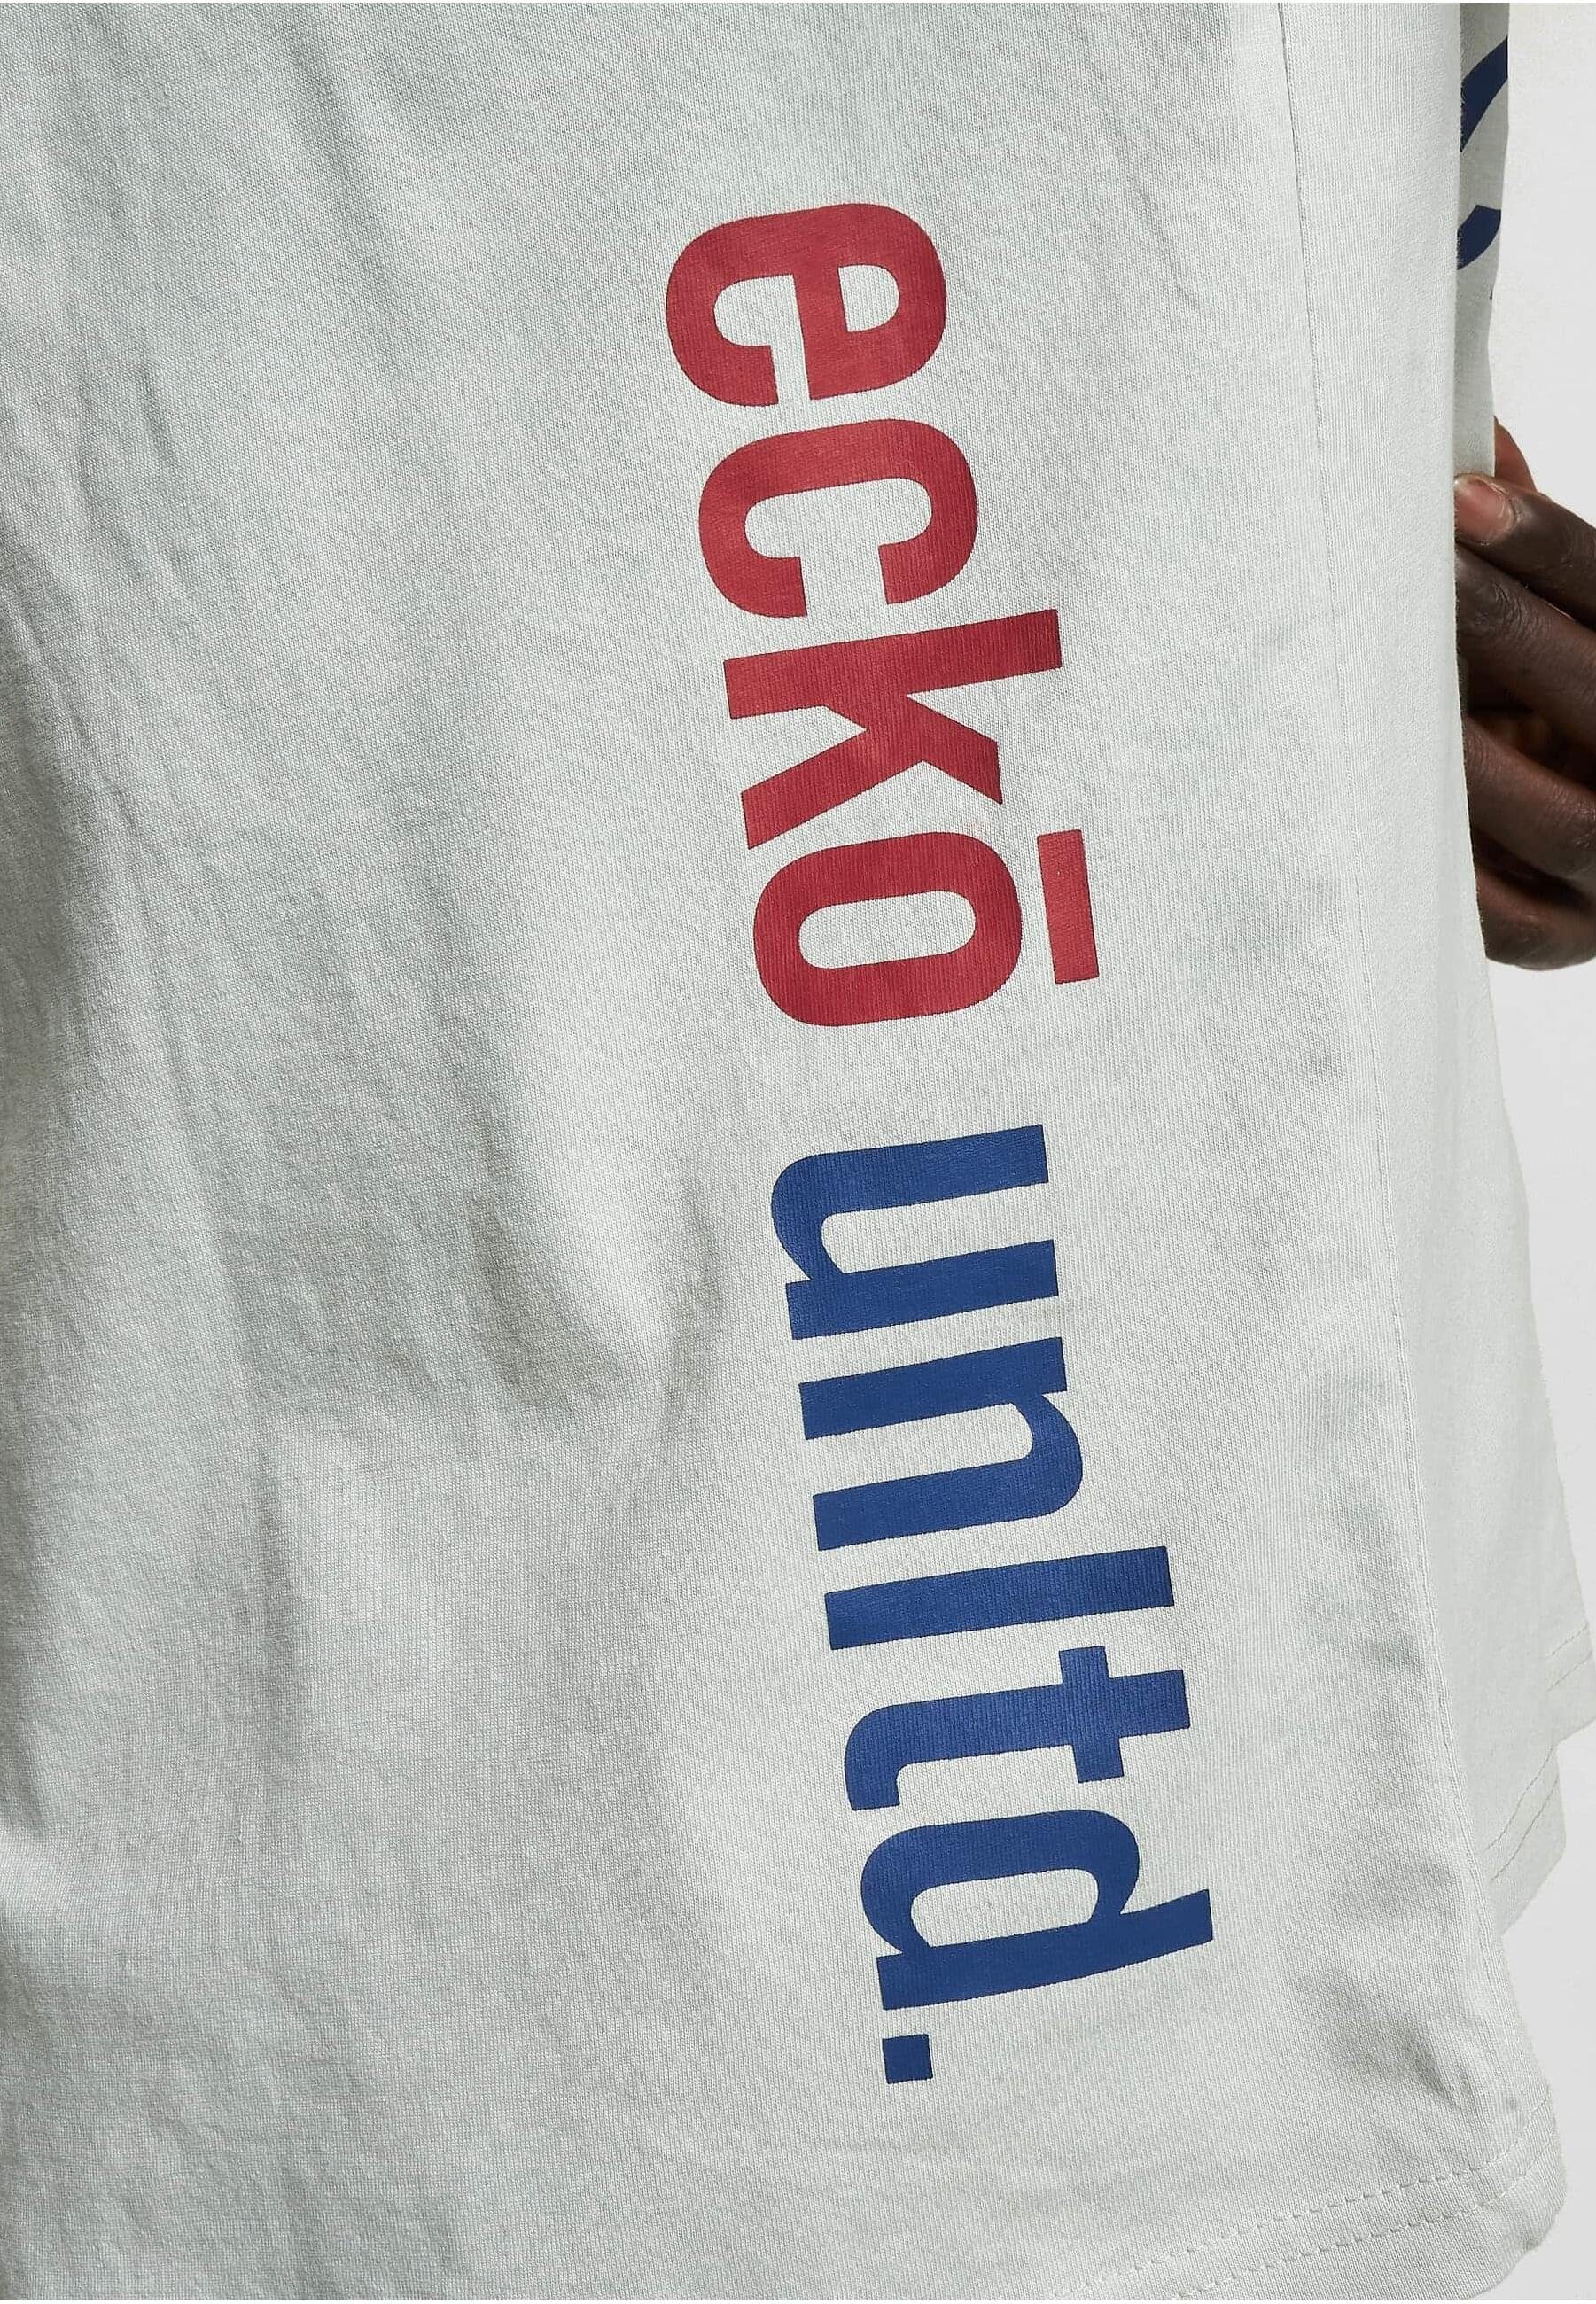 Unltd. Ecko (1-tlg) T-Shirt Unltd. Ecko T-Shirt grey/red/blue Grande Herren